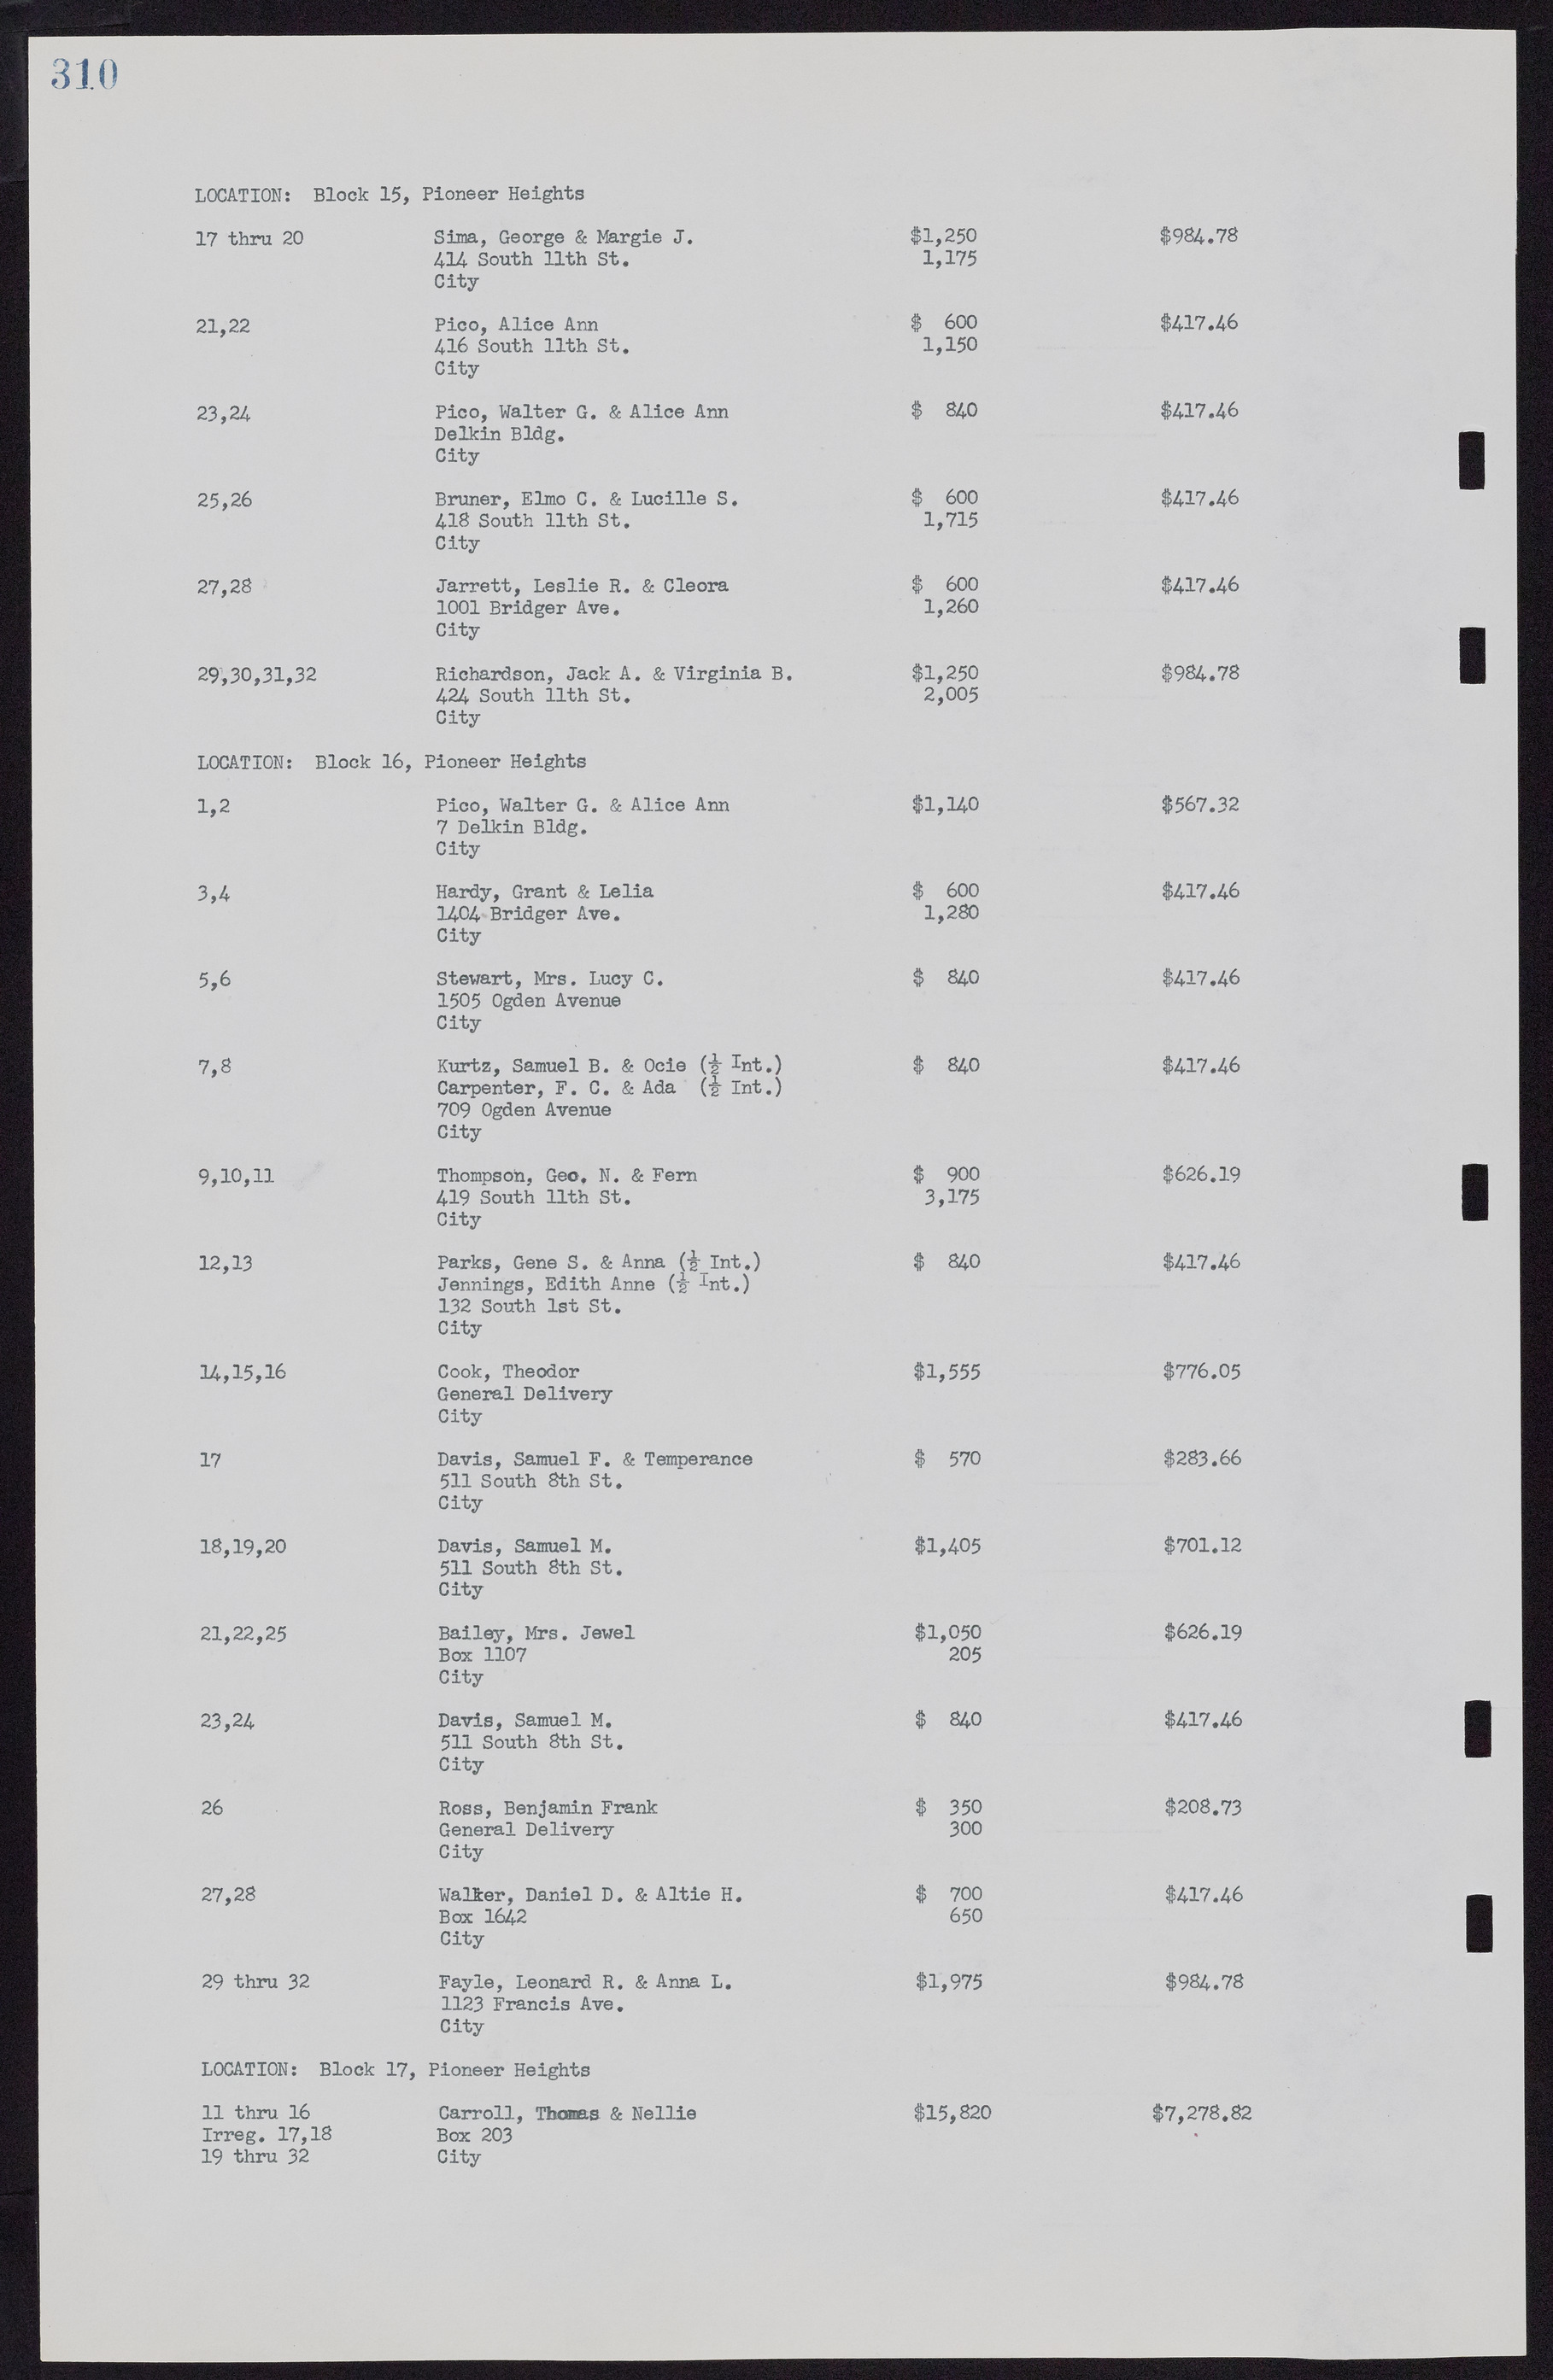 Las Vegas City Commission Minutes, November 7, 1949 to May 21, 1952, lvc000007-322